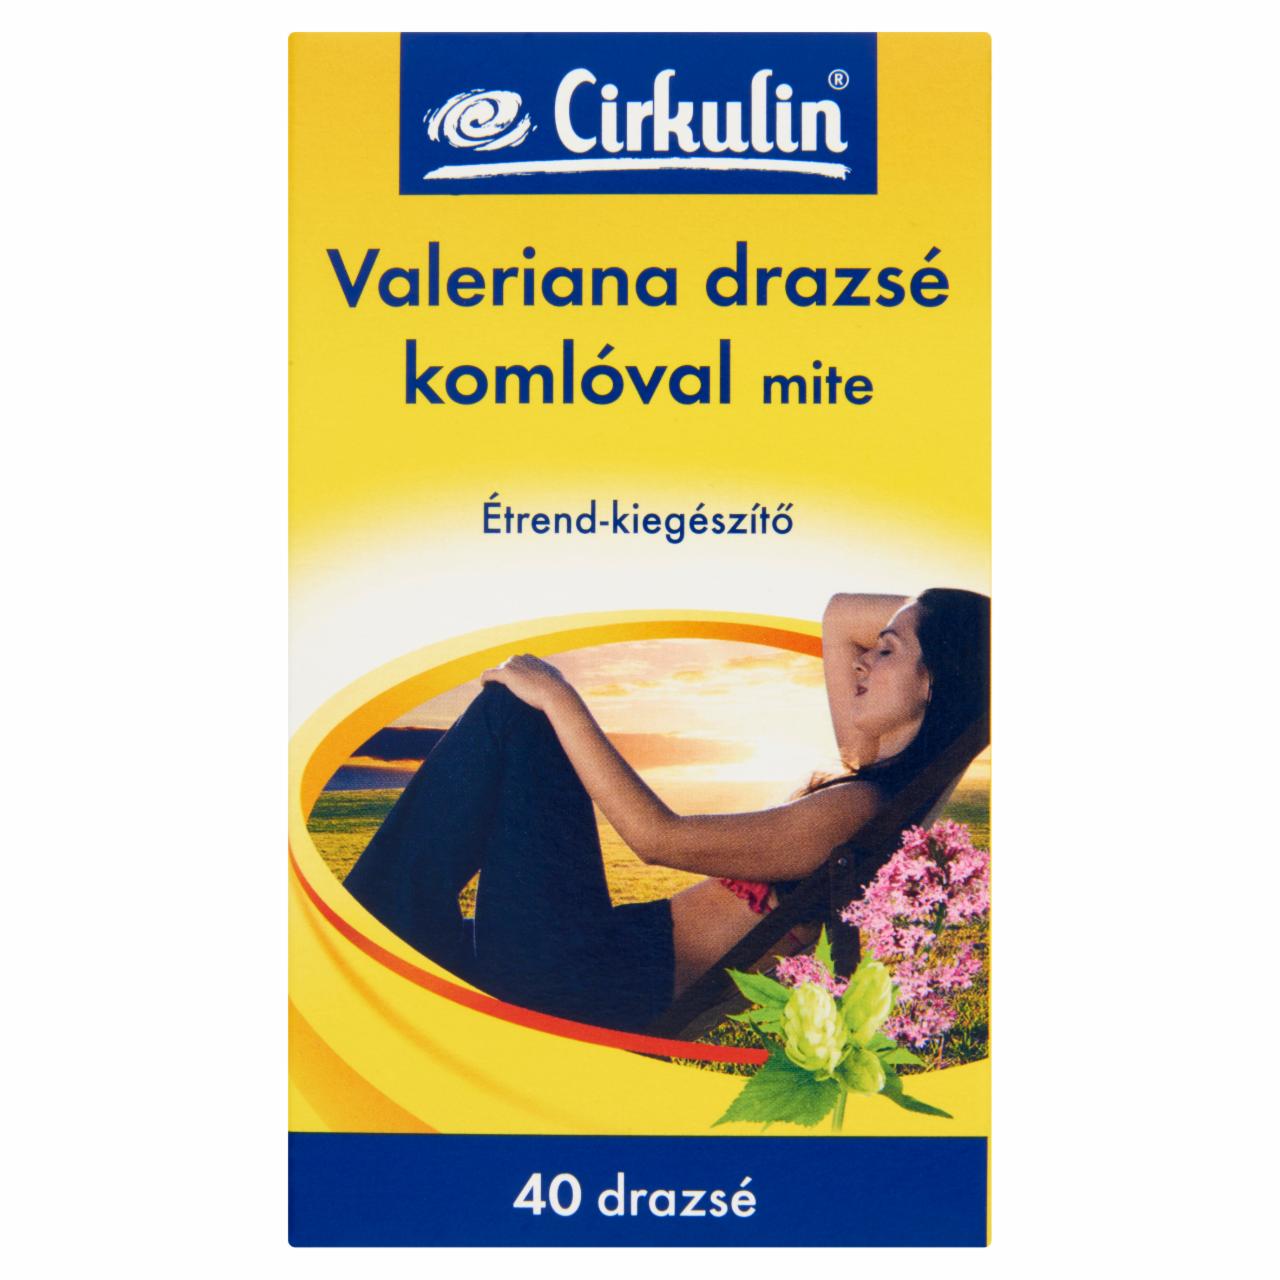 Képek - Cirkulin Valeriana drazsé komlóval mite 40 db 18,8 g